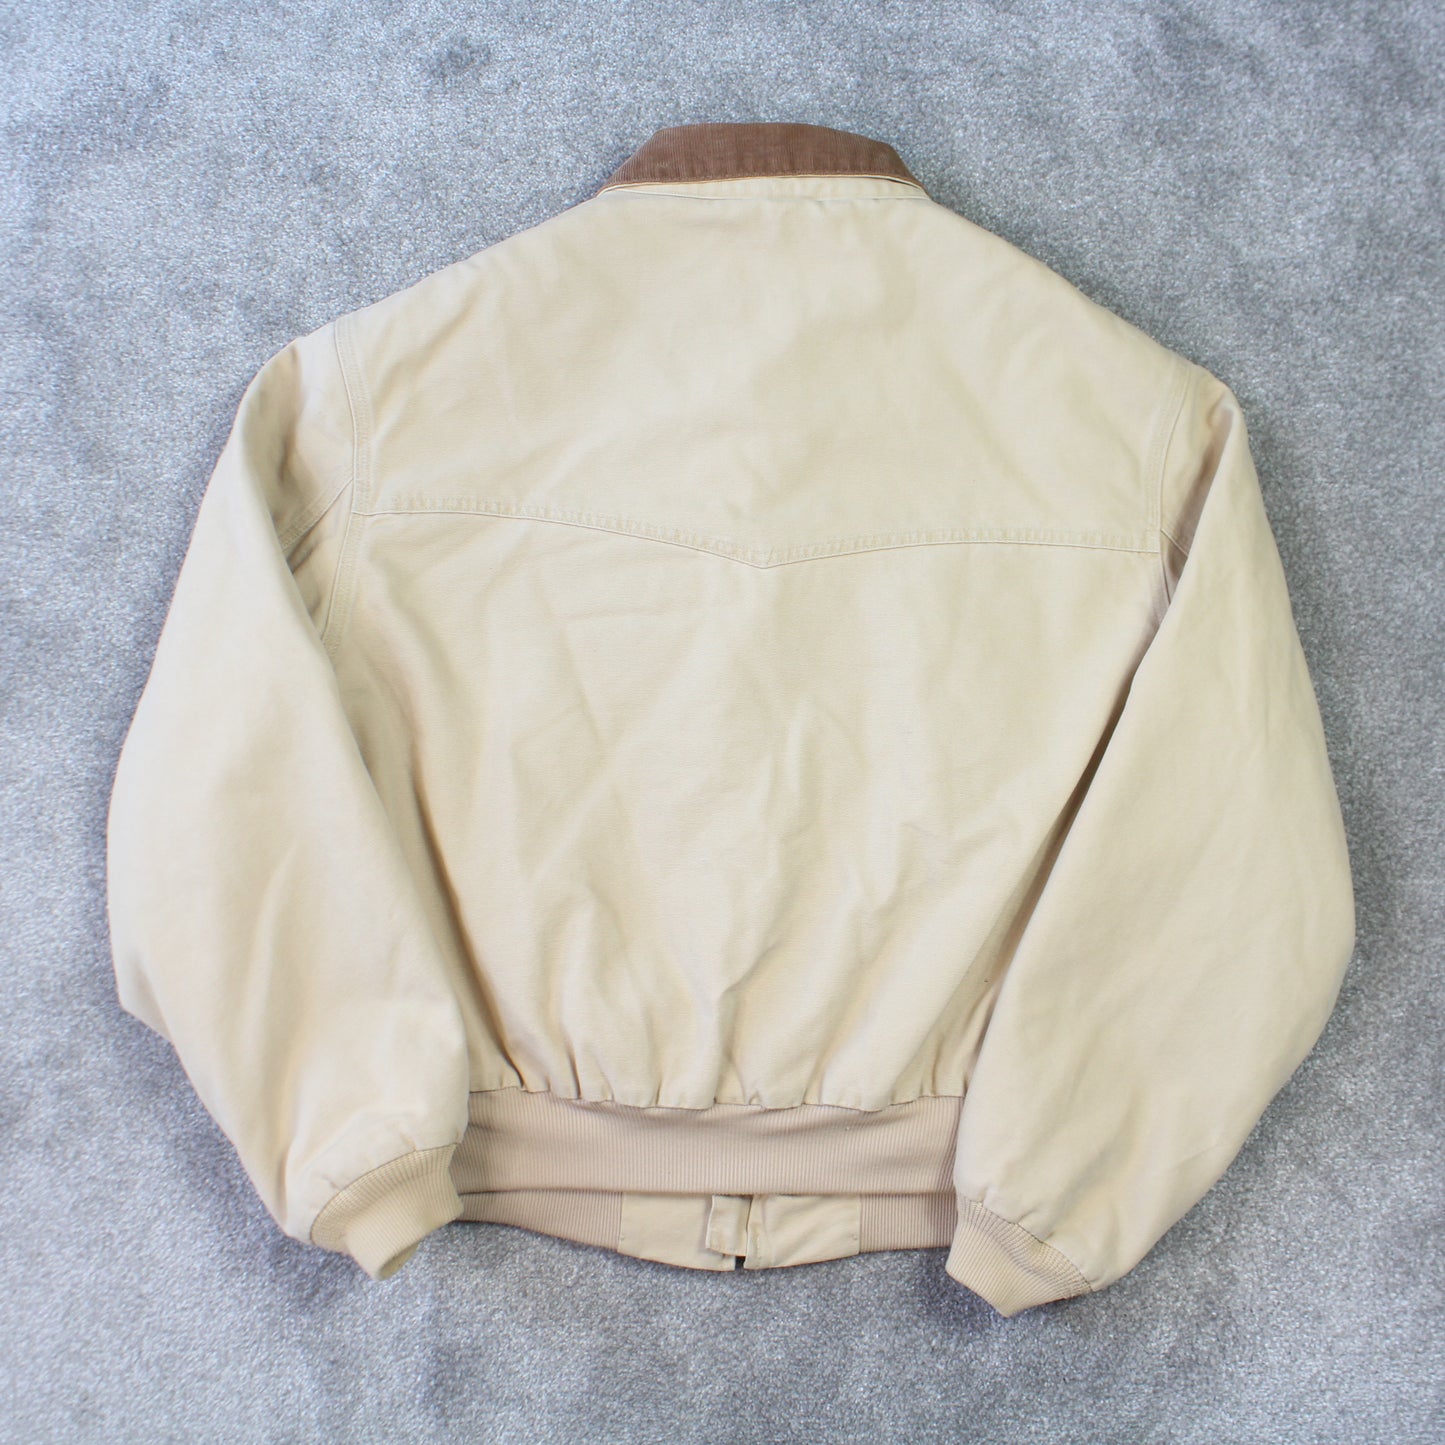 RARE Vintage Carhartt Detroit Workwear Jacket Beige - (L)